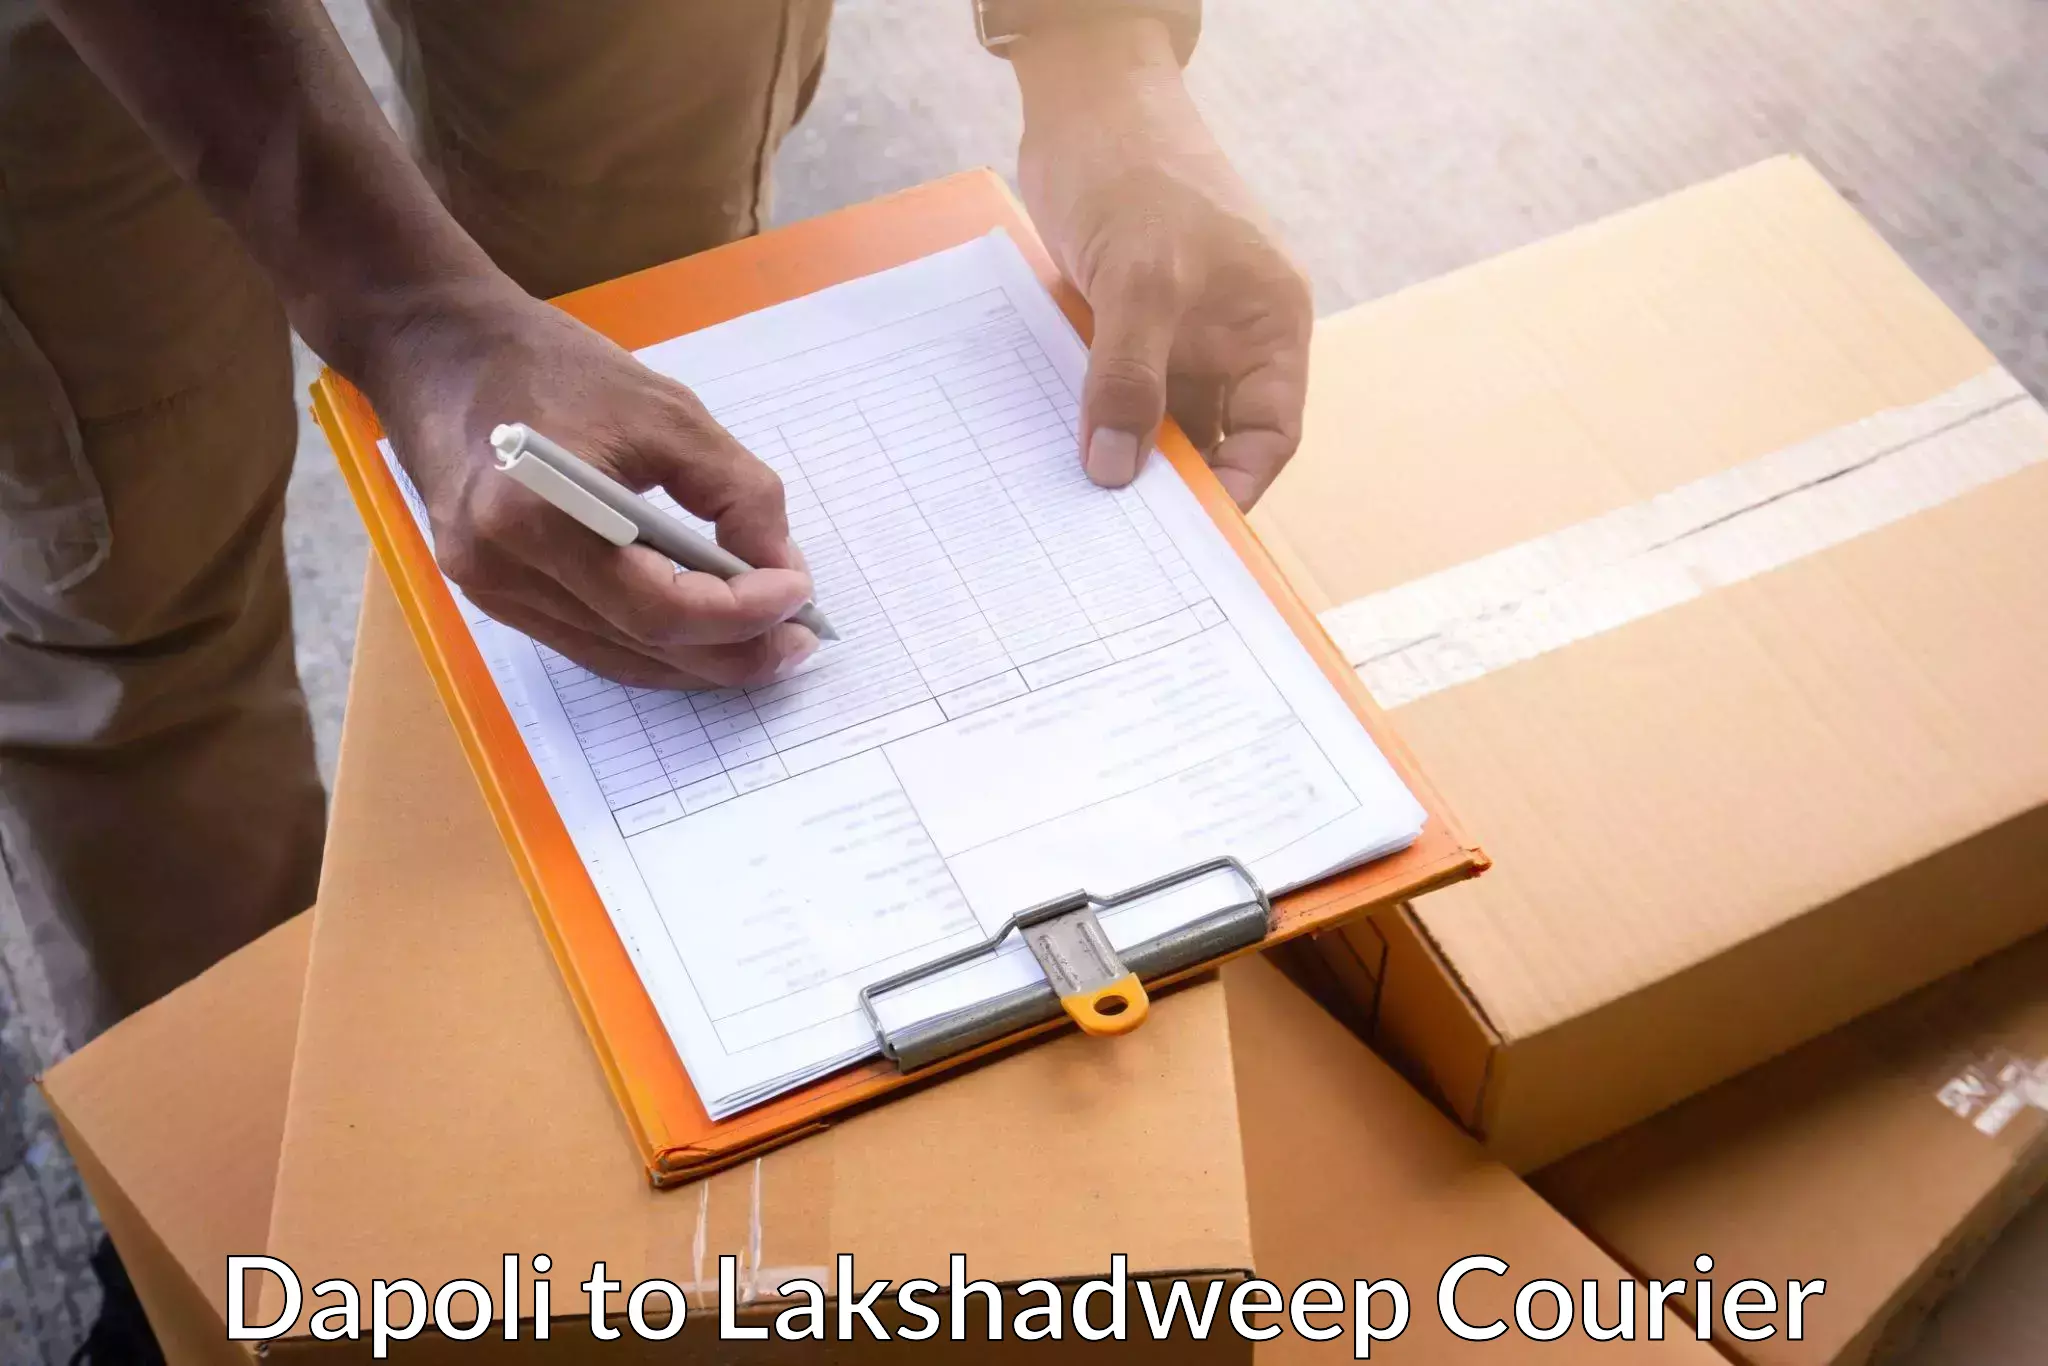 Global logistics network Dapoli to Lakshadweep